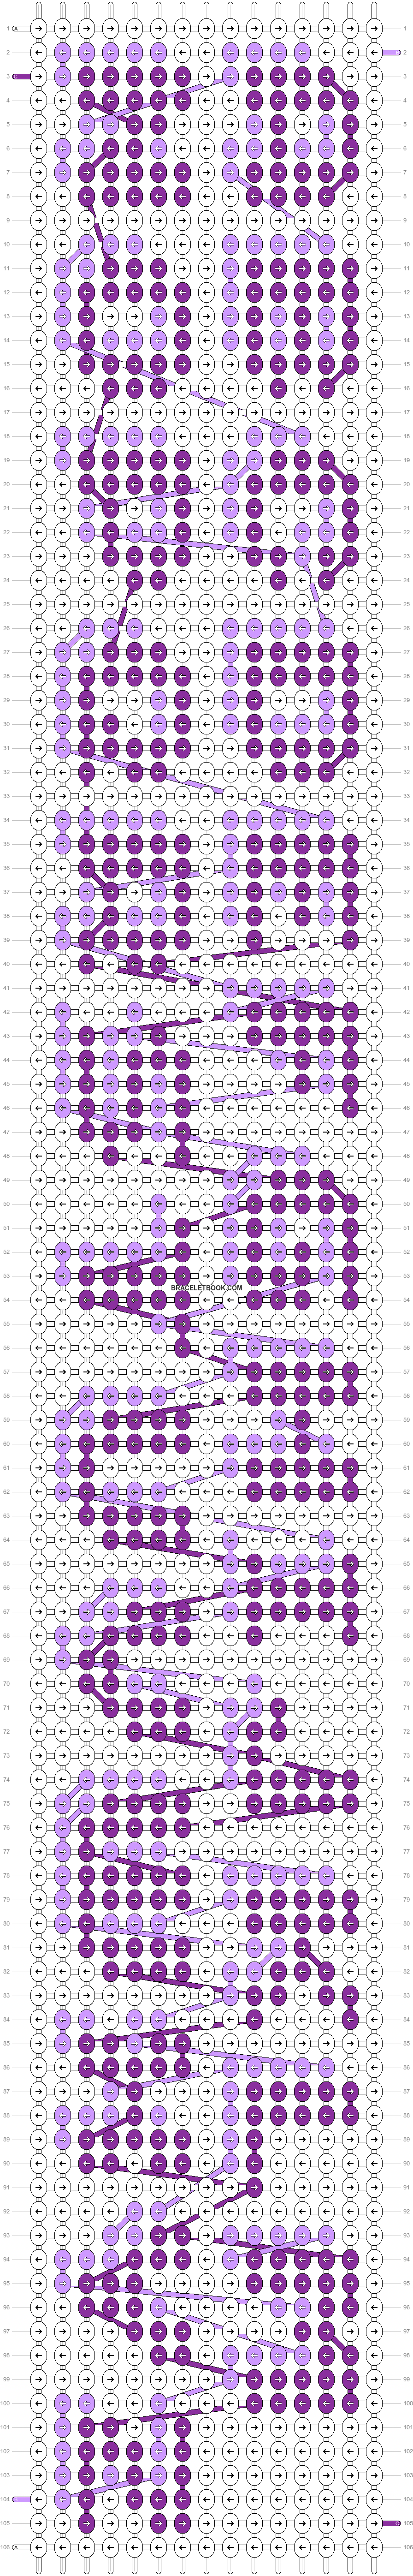 Alpha pattern #34279 variation #40059 pattern